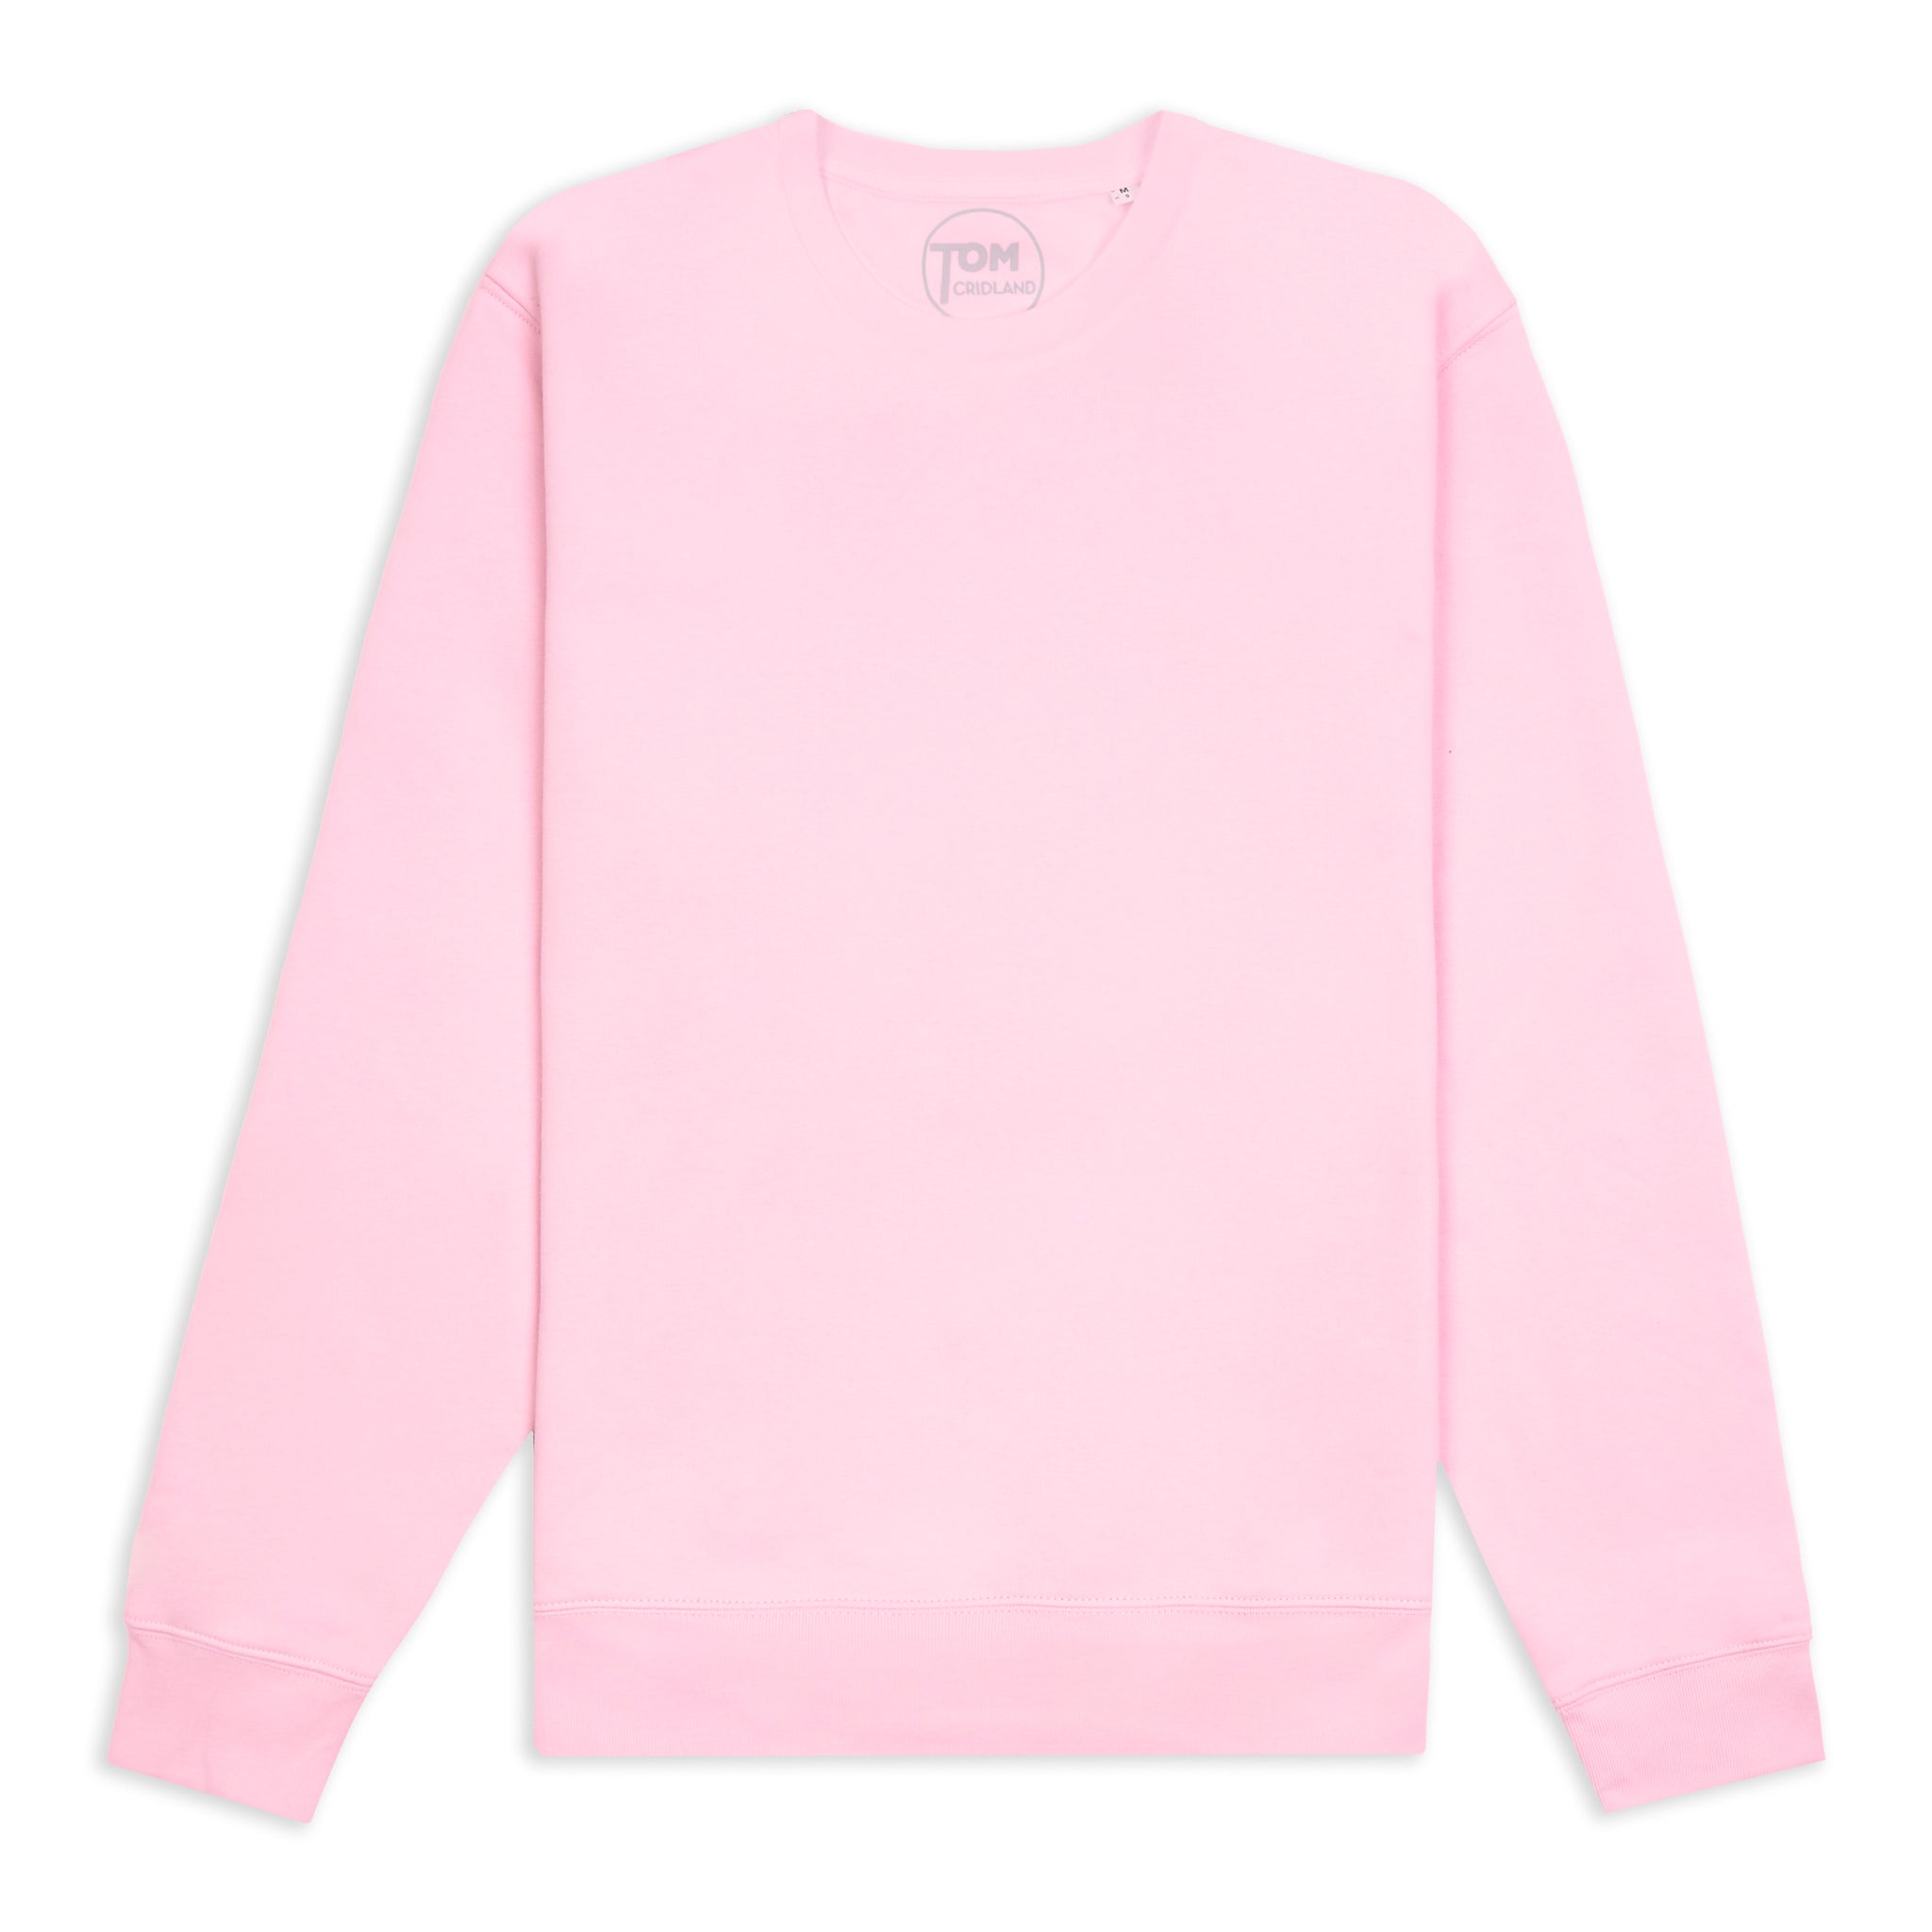 The Weakest Pink 30 Year™ Sweatshirt